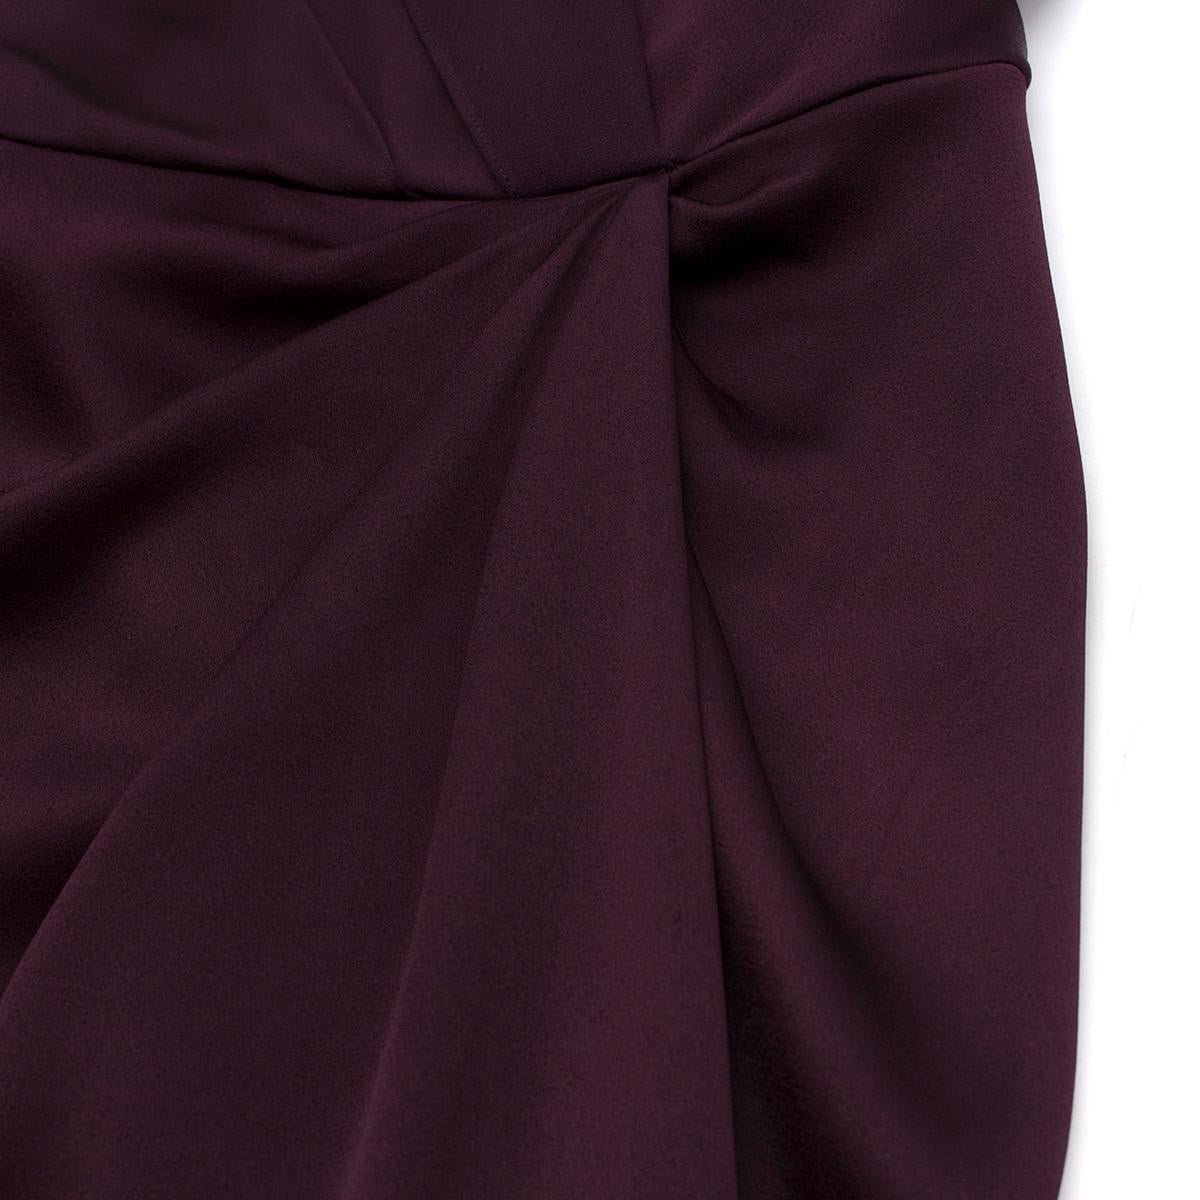 Women's Jenny Packham Ruffle-Front Purple Gown US 4 For Sale